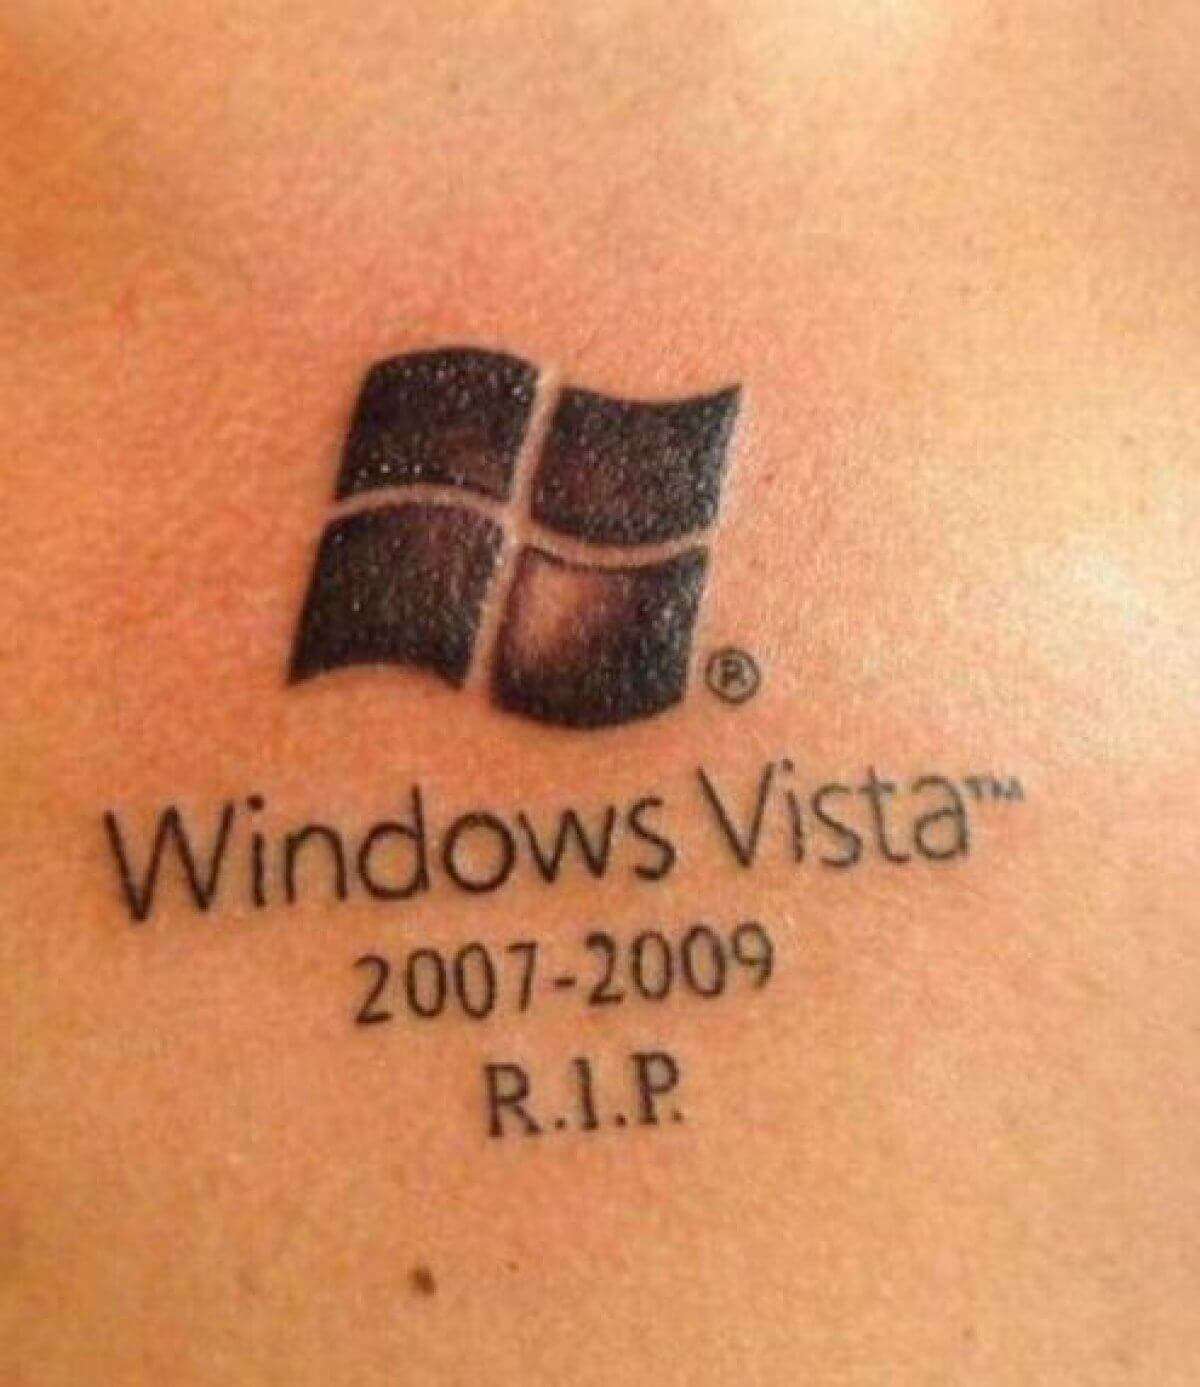 Funny Tattoos: Windows Vista